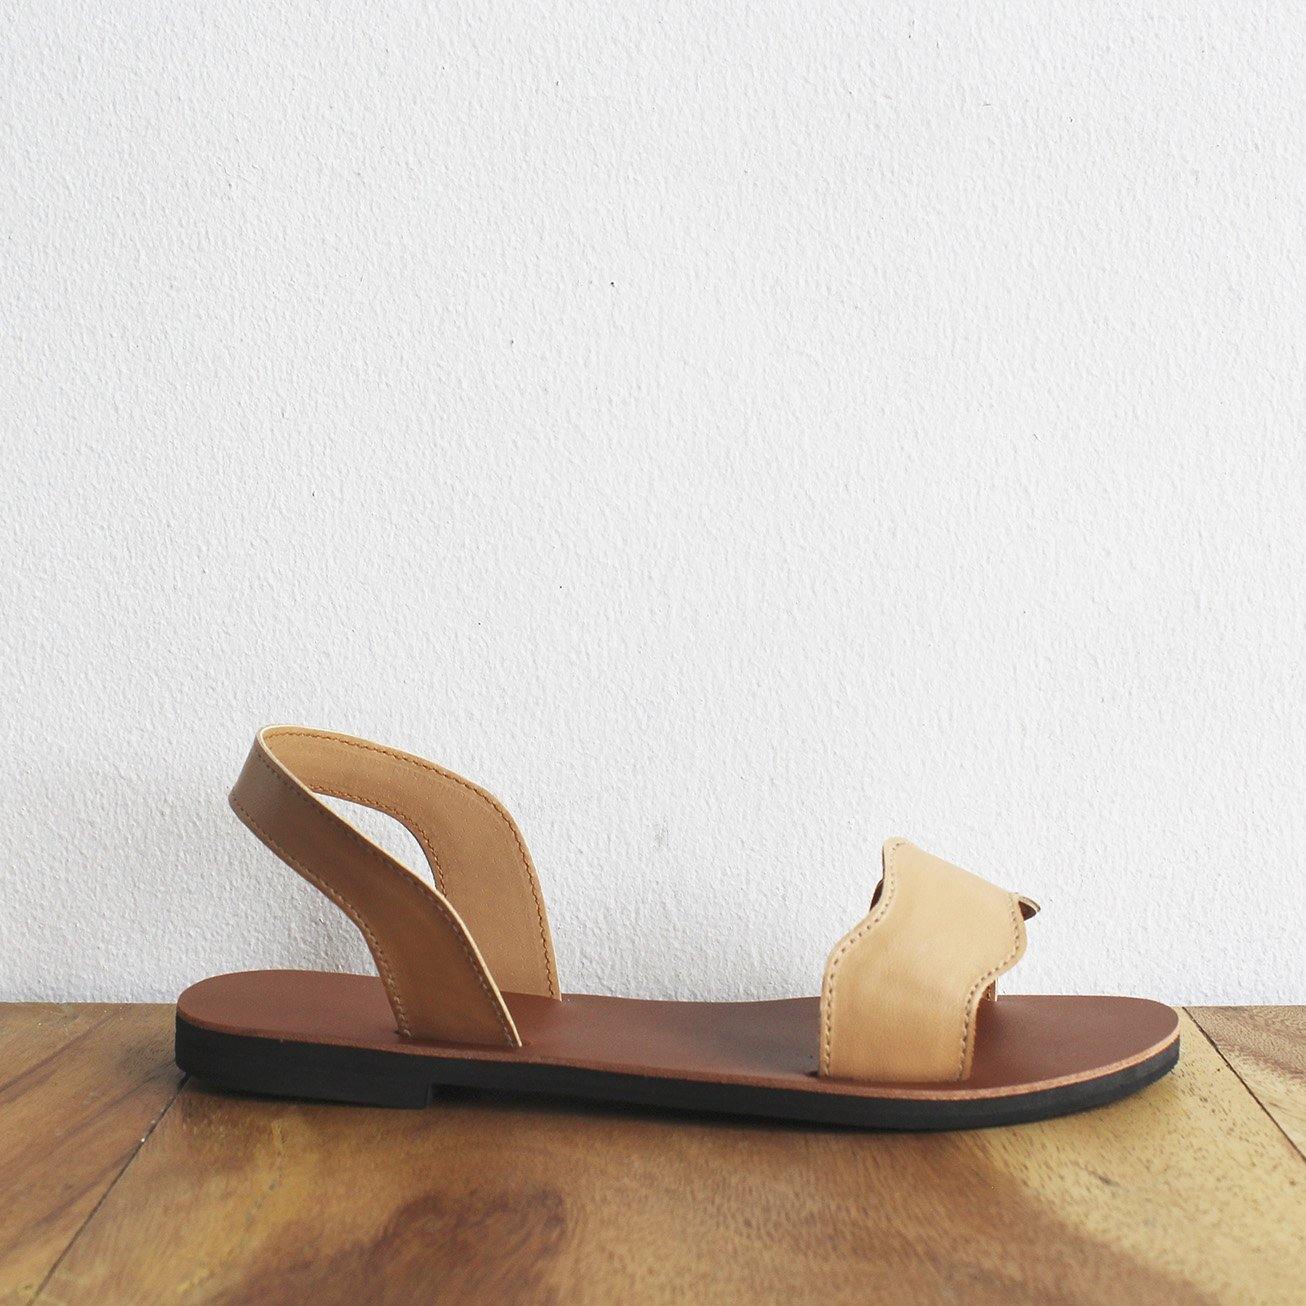 Scallop Sandals (5 pairs per set) - Risque Manufacturing